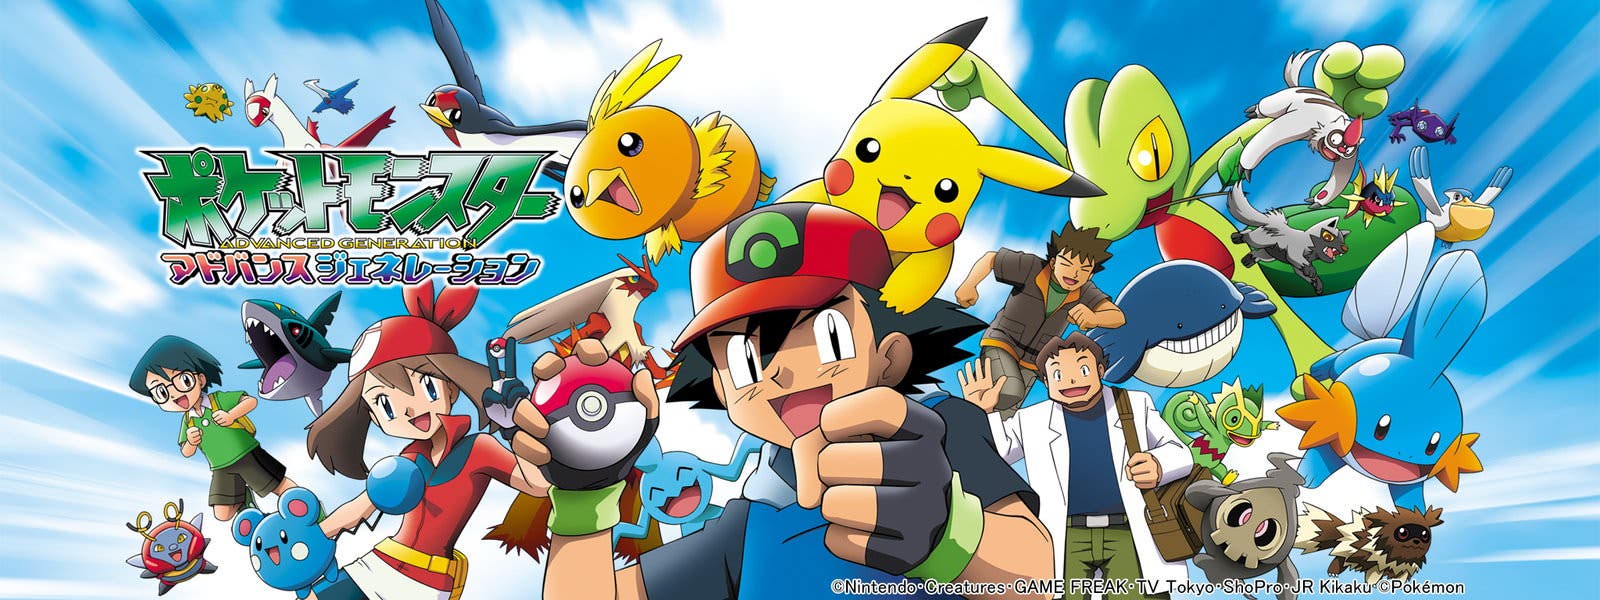 Pokémon Advanced La Sexta Temporada Del Anime Pokémon Llegará En 